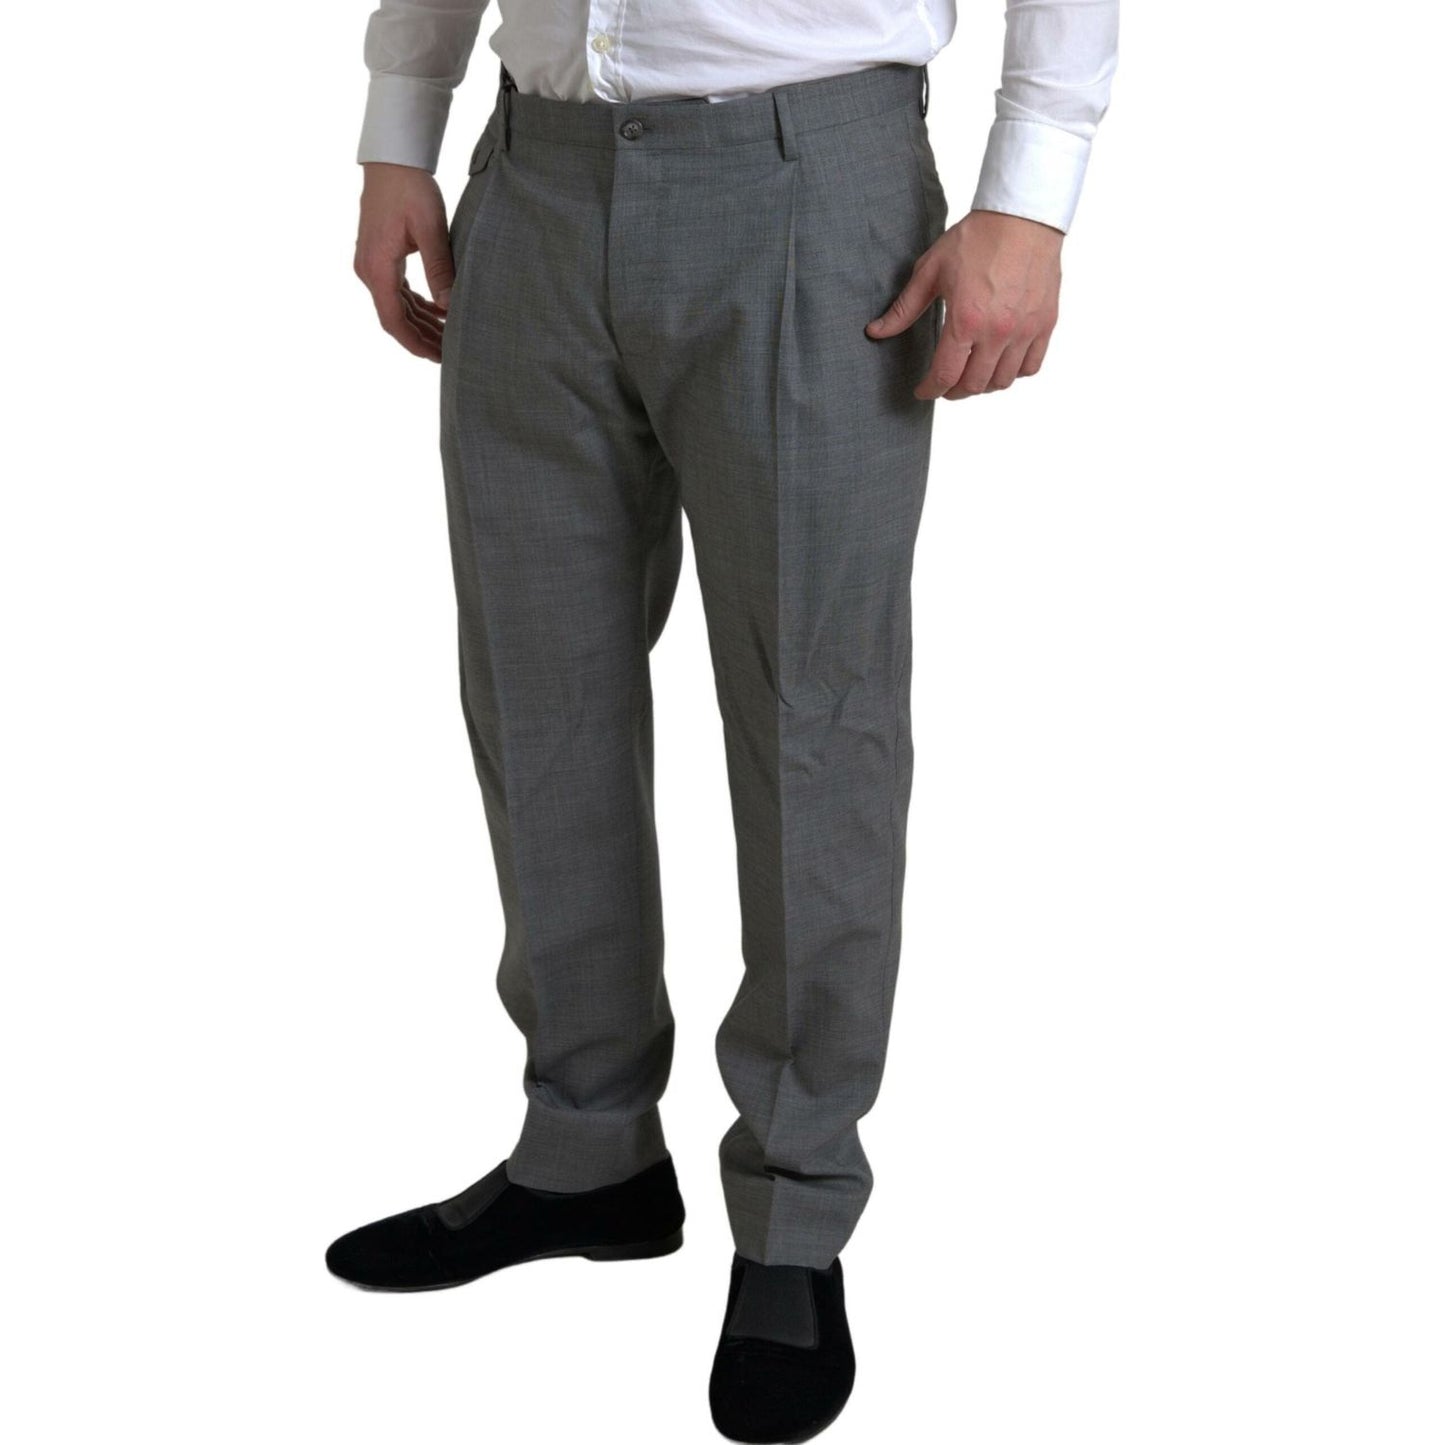 Dolce & Gabbana Elegant Skinny Wool Dress Pants in Grey gray-wool-chino-skinny-men-dress-trouser-pants 465A9103bg-scaled-c1cd51d5-5a4.jpg